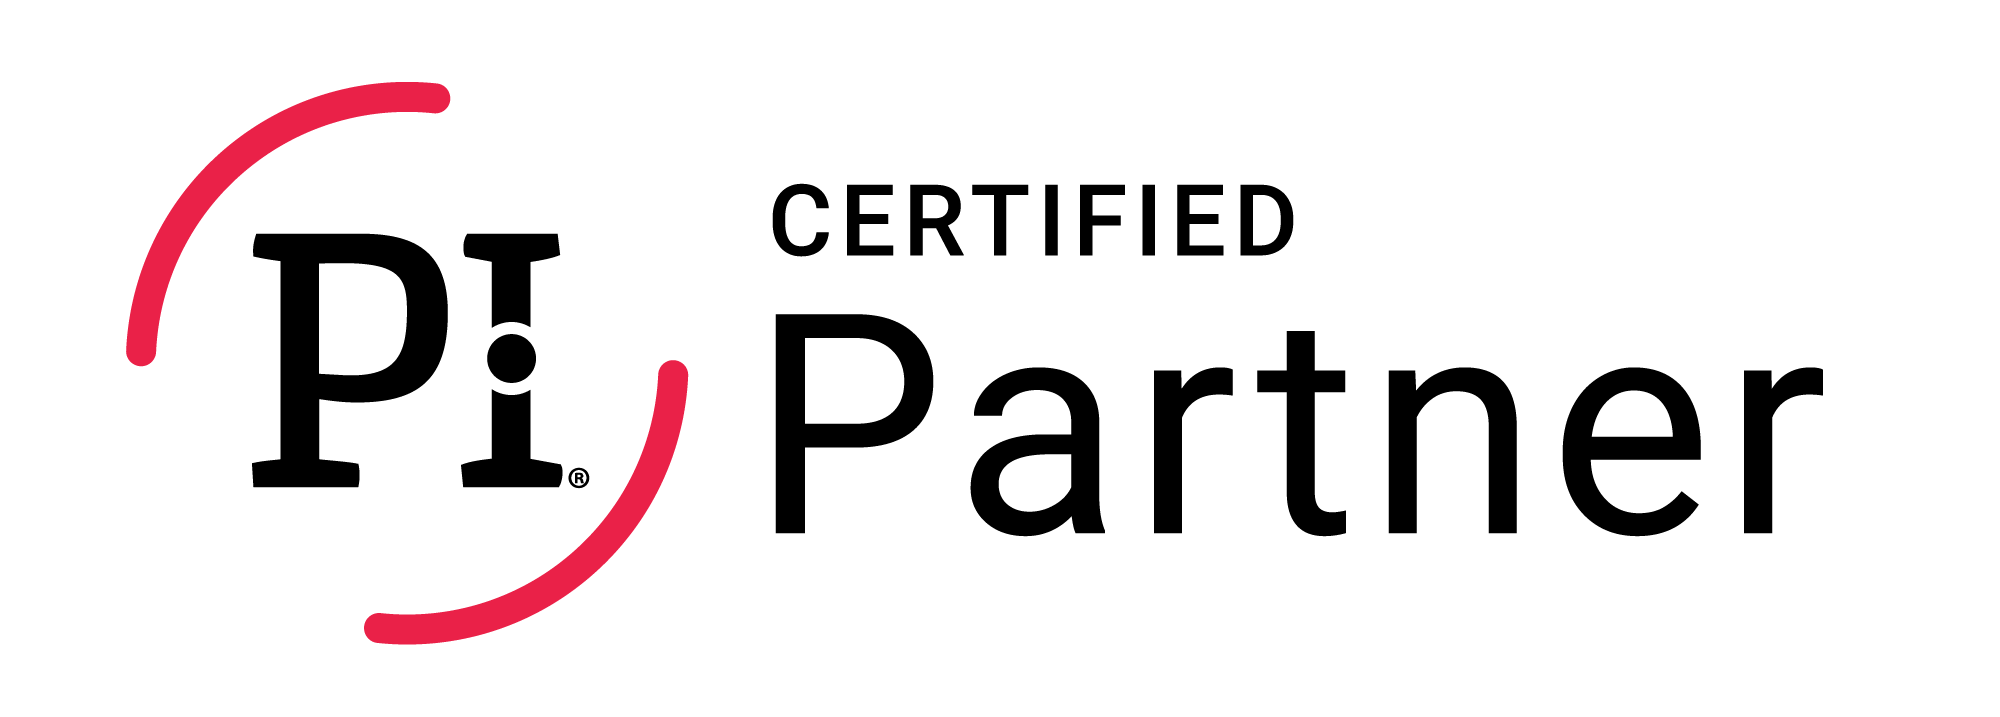 Certified Partner logo